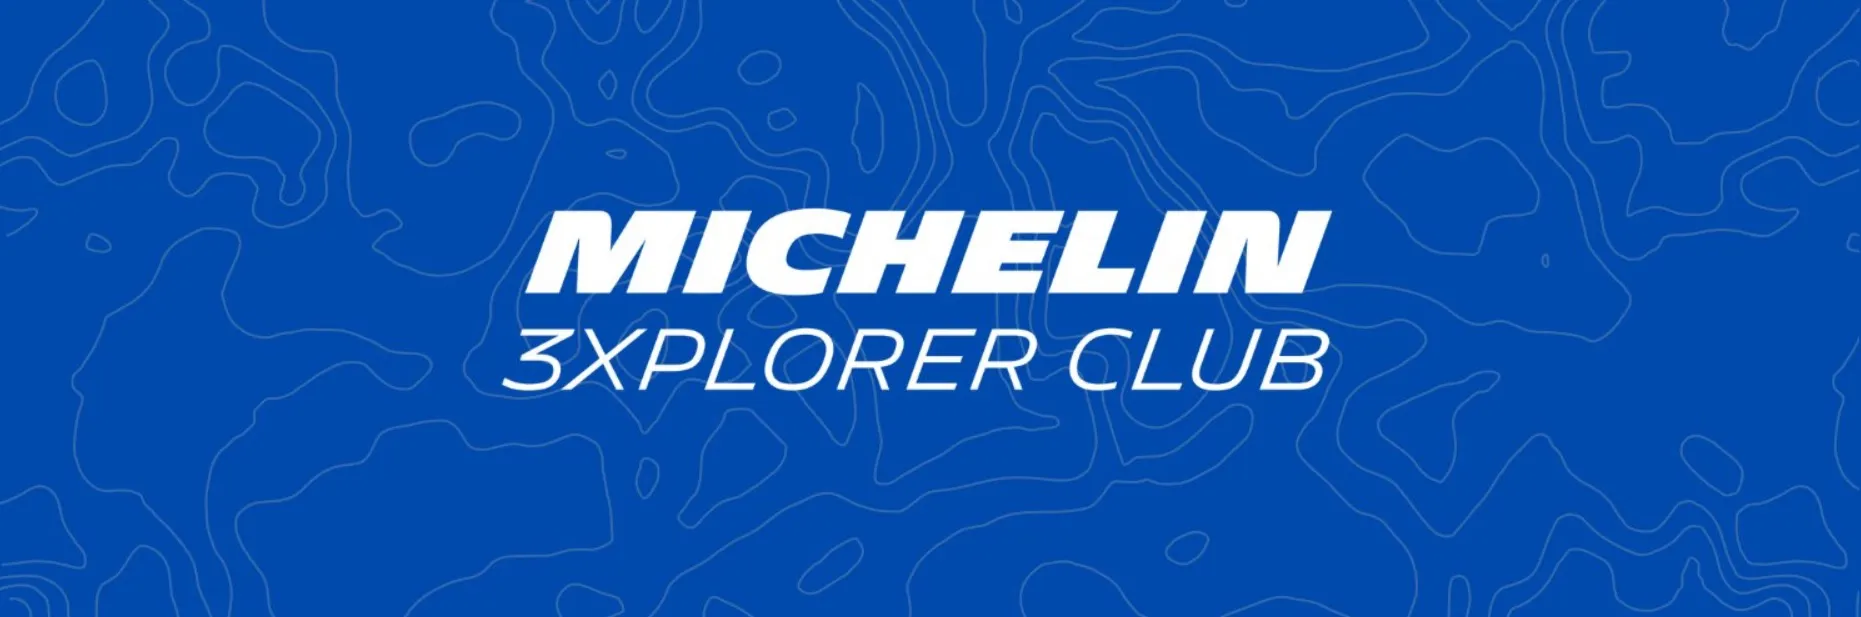 Michelin 3xplorer Club